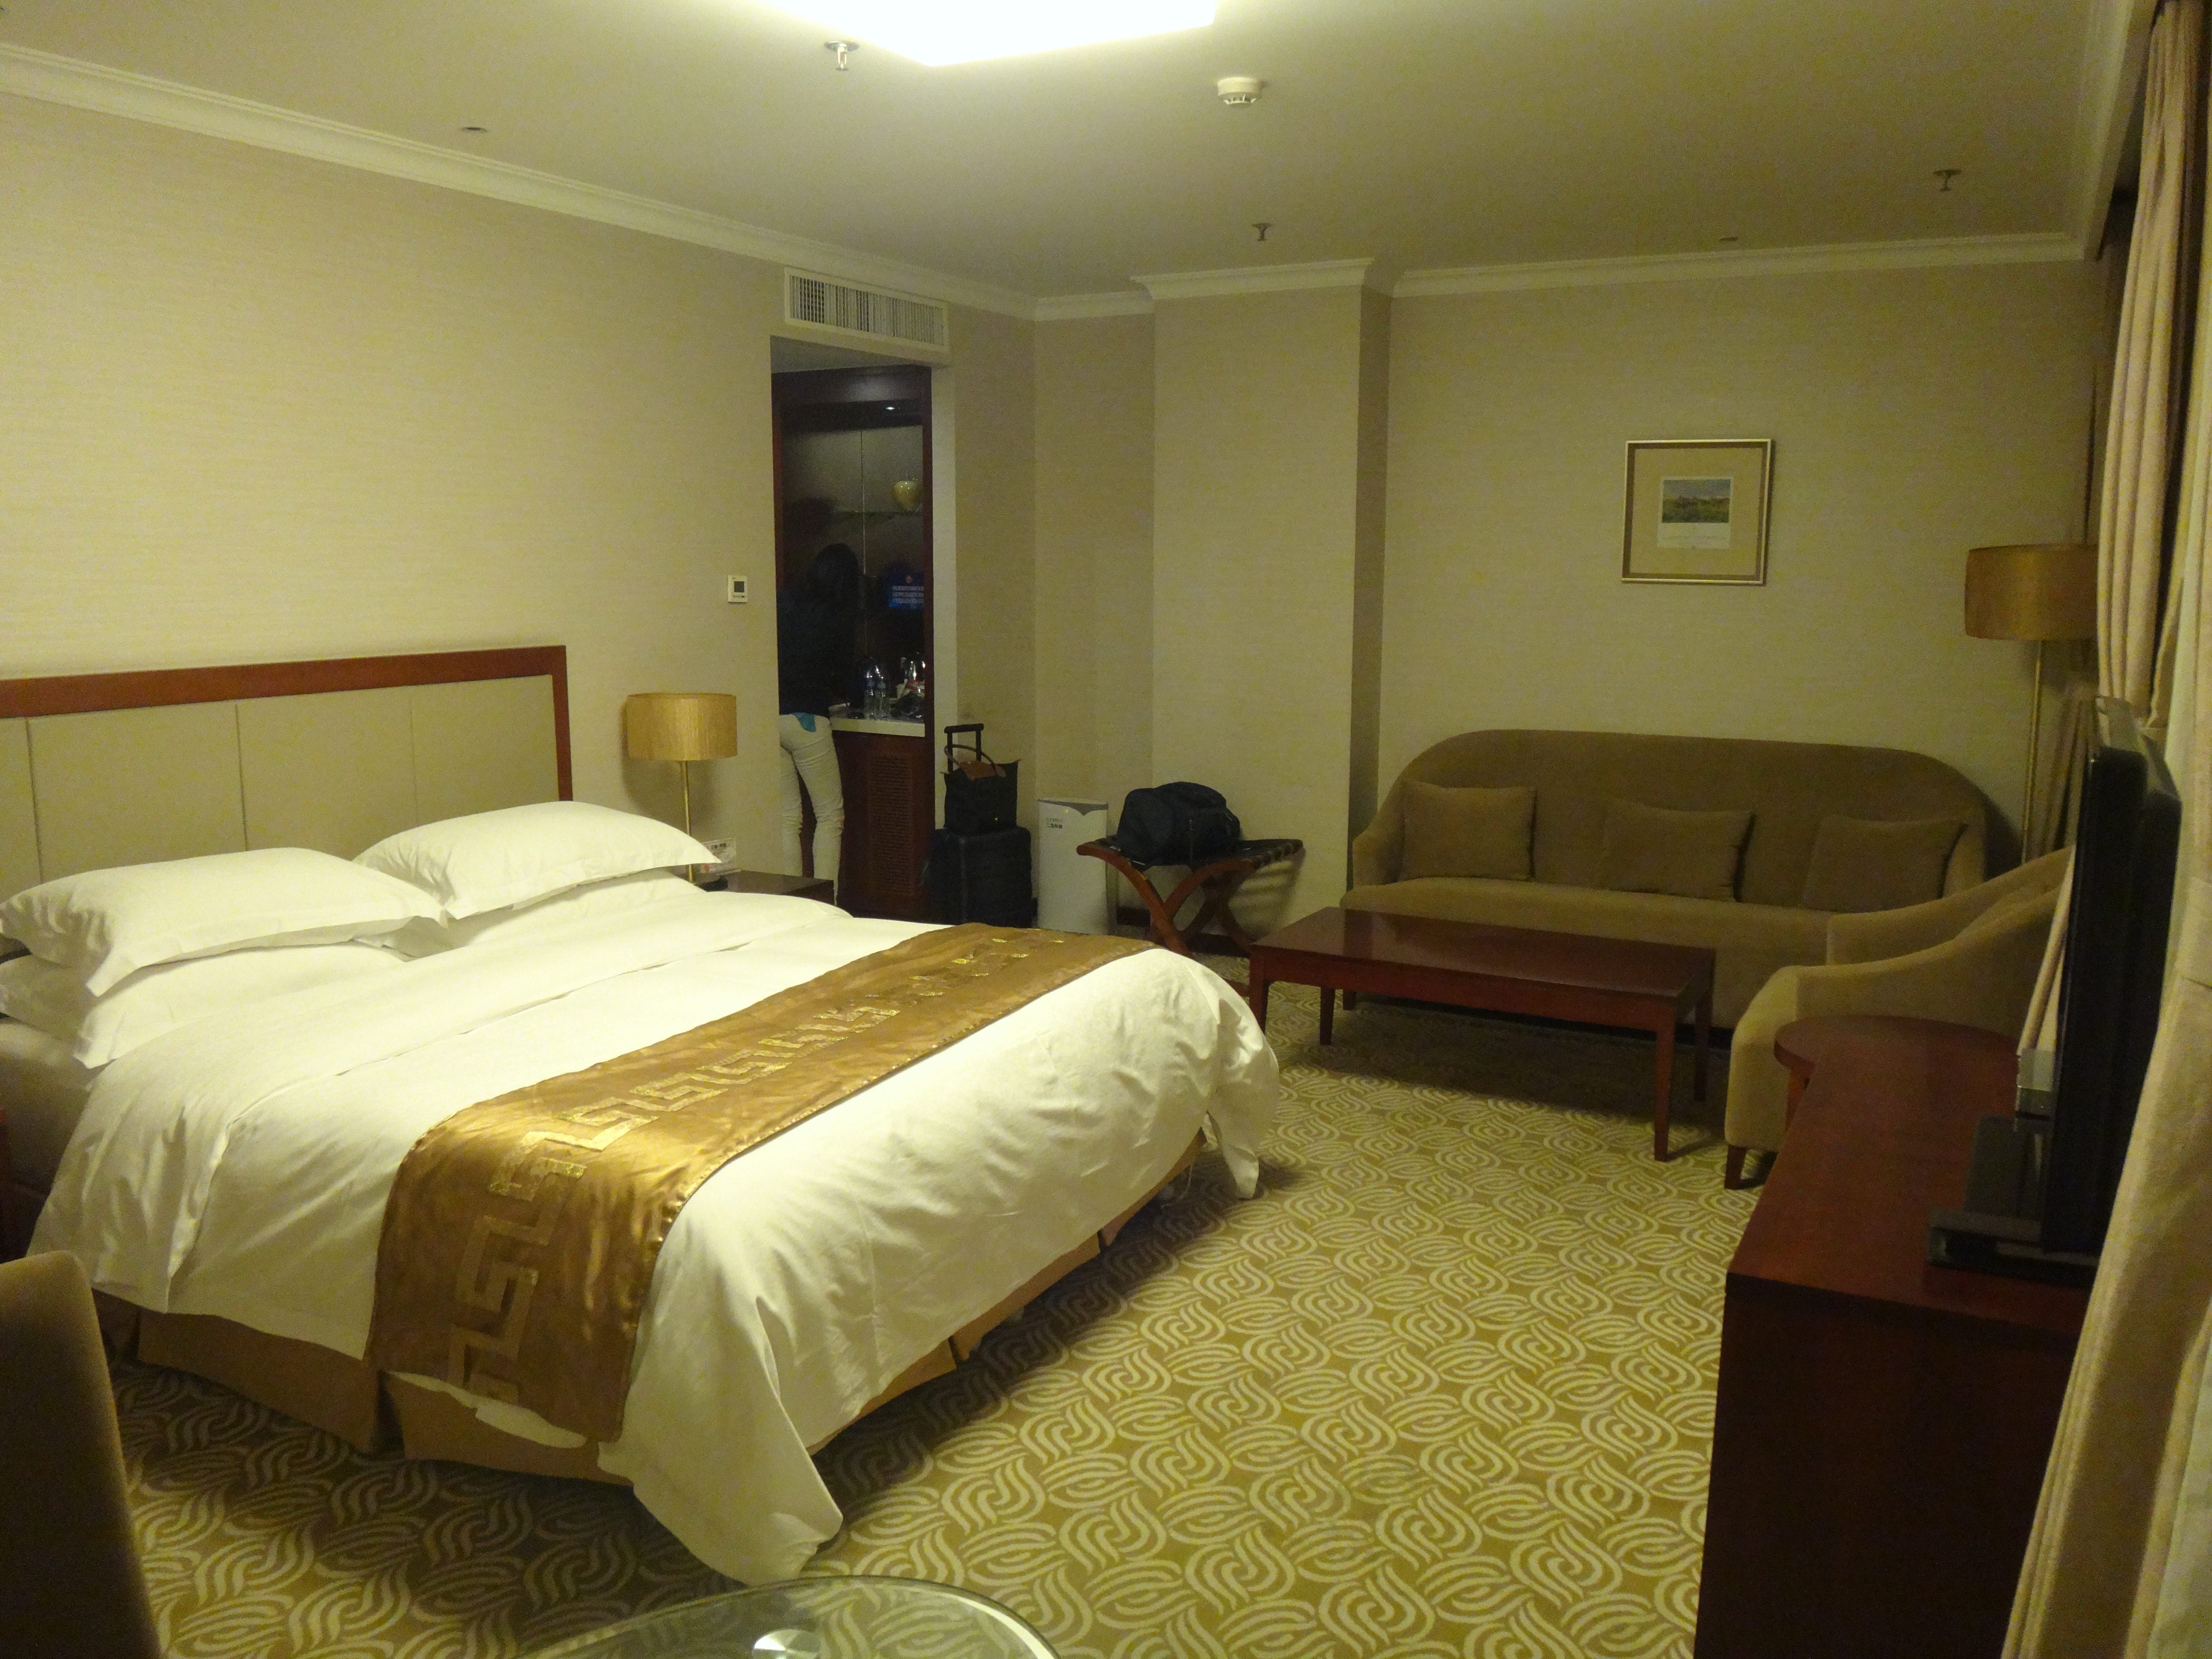 Bedroom at Inner Mongolia Grand Hotel, Wangfujing.

 